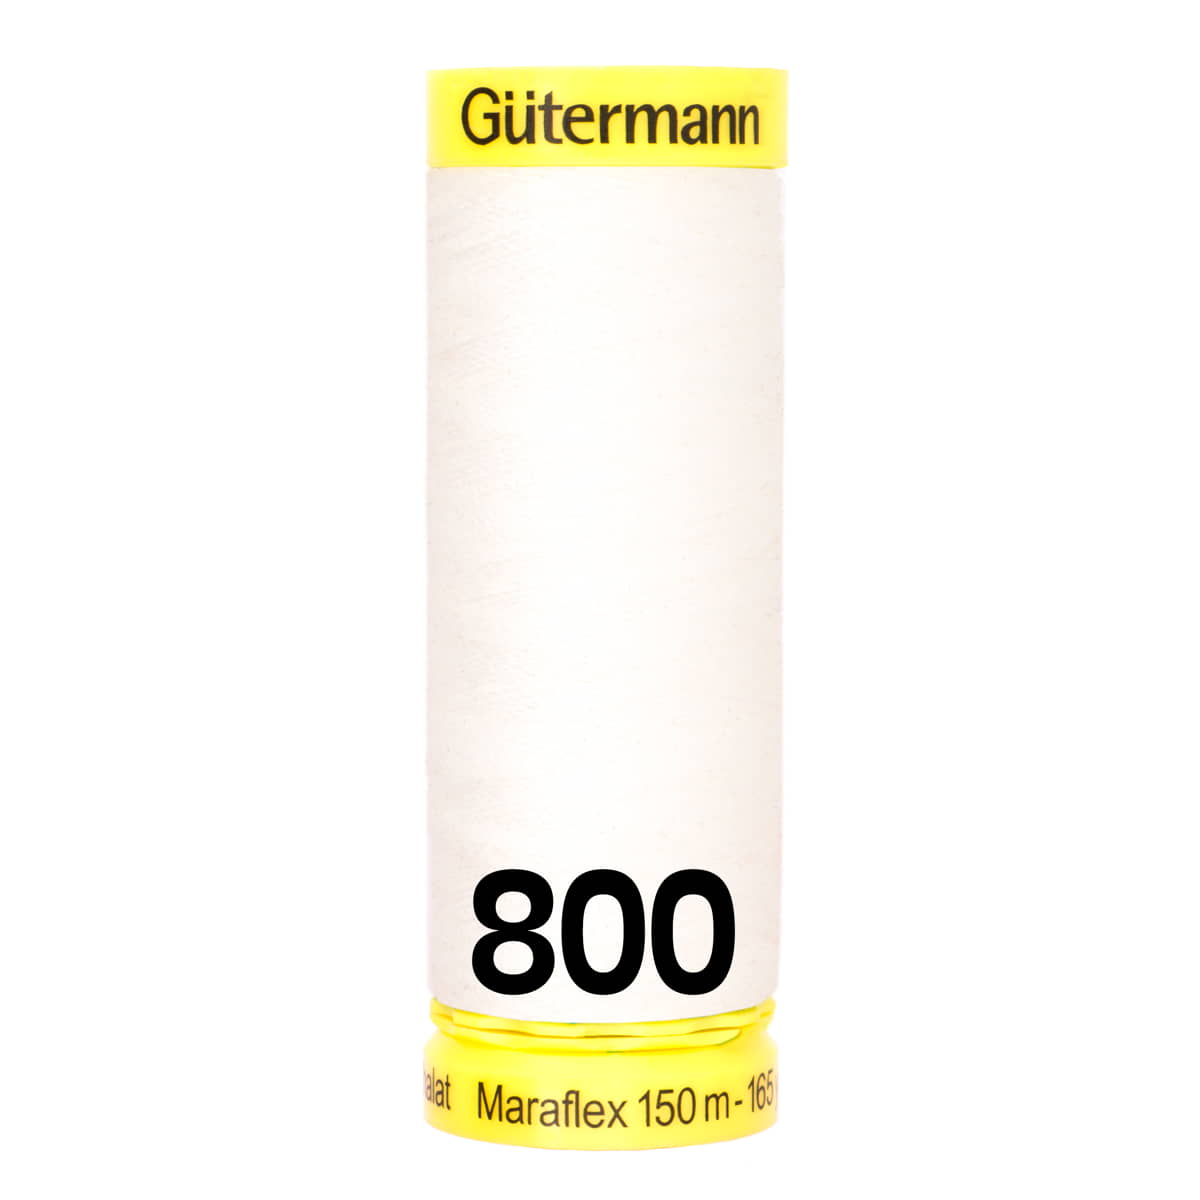 Gütermann MaraFlex 150m - 800 wit GUTERMANN-MARAFLEX-150-800 4029394998393 - Fourniturenkraam.nl